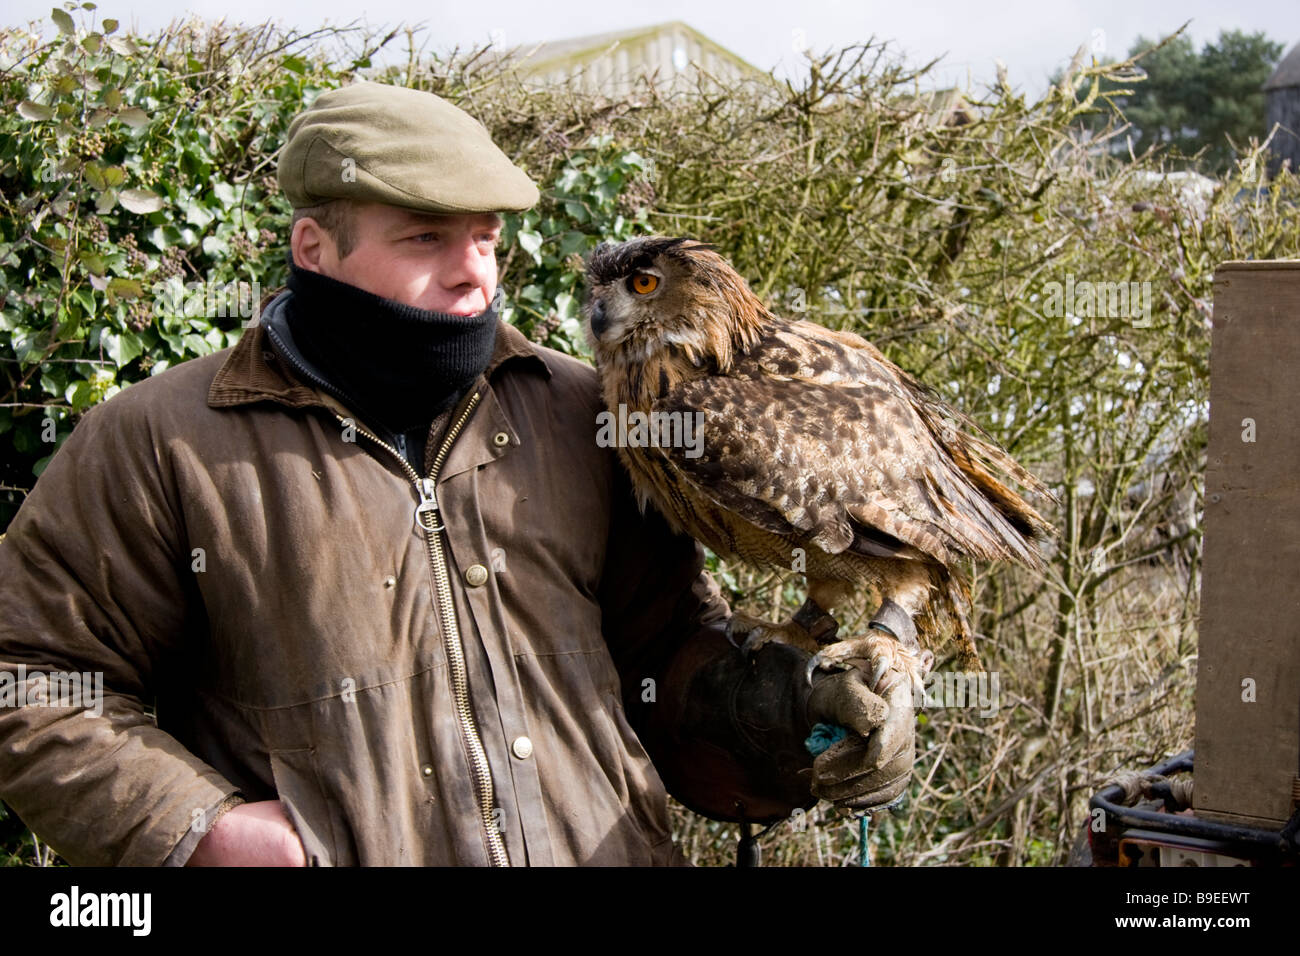 European Eagle Owl bubo bubo with its keeper Stock Photo